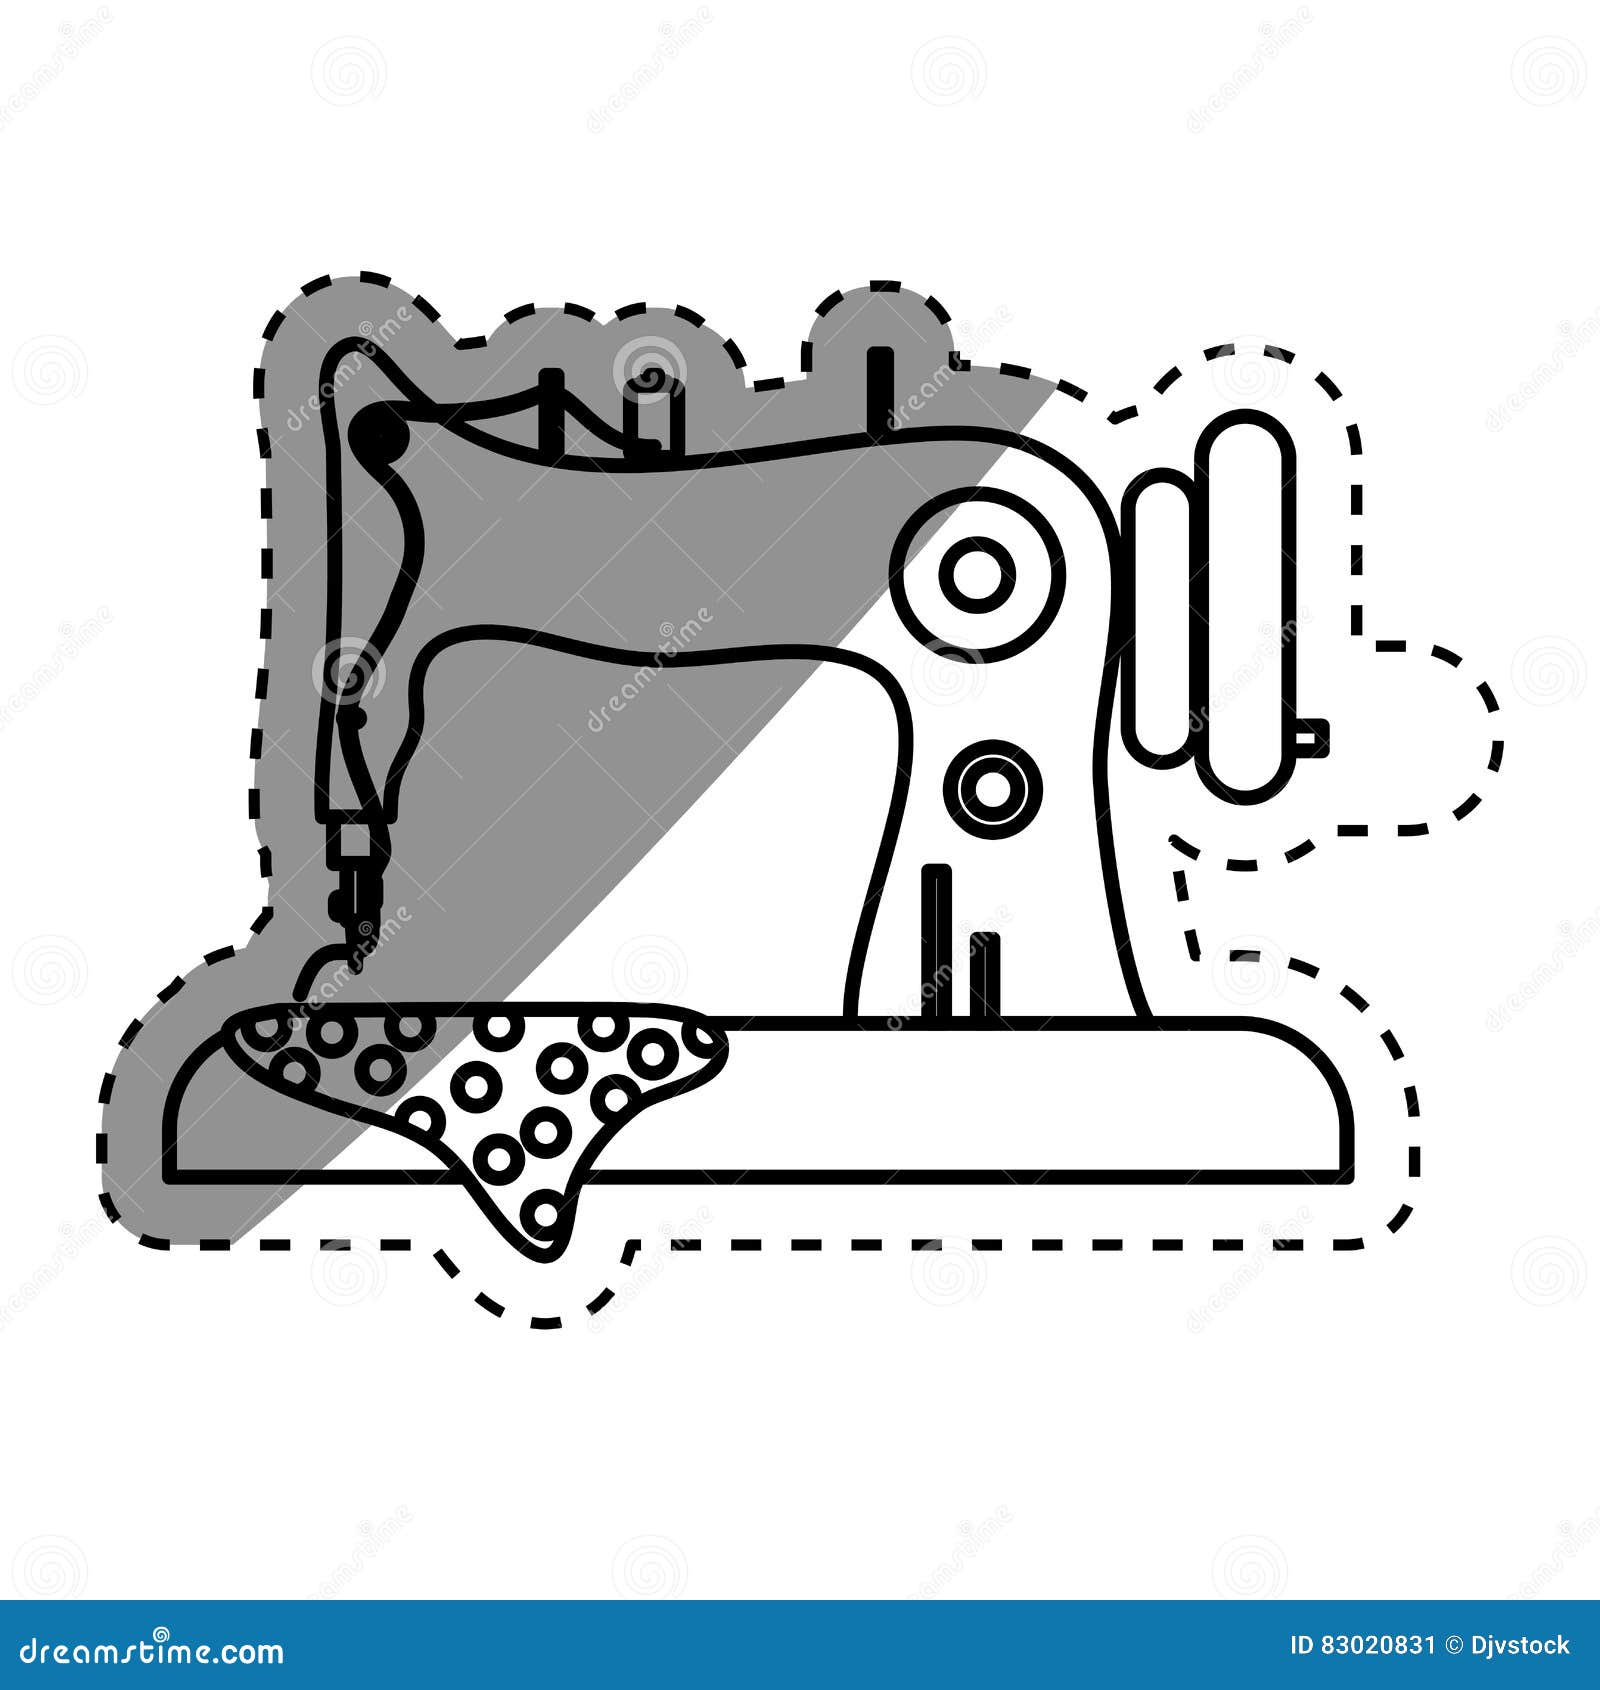 Isolated sewing machine stock illustration. Illustration of handcraft ...